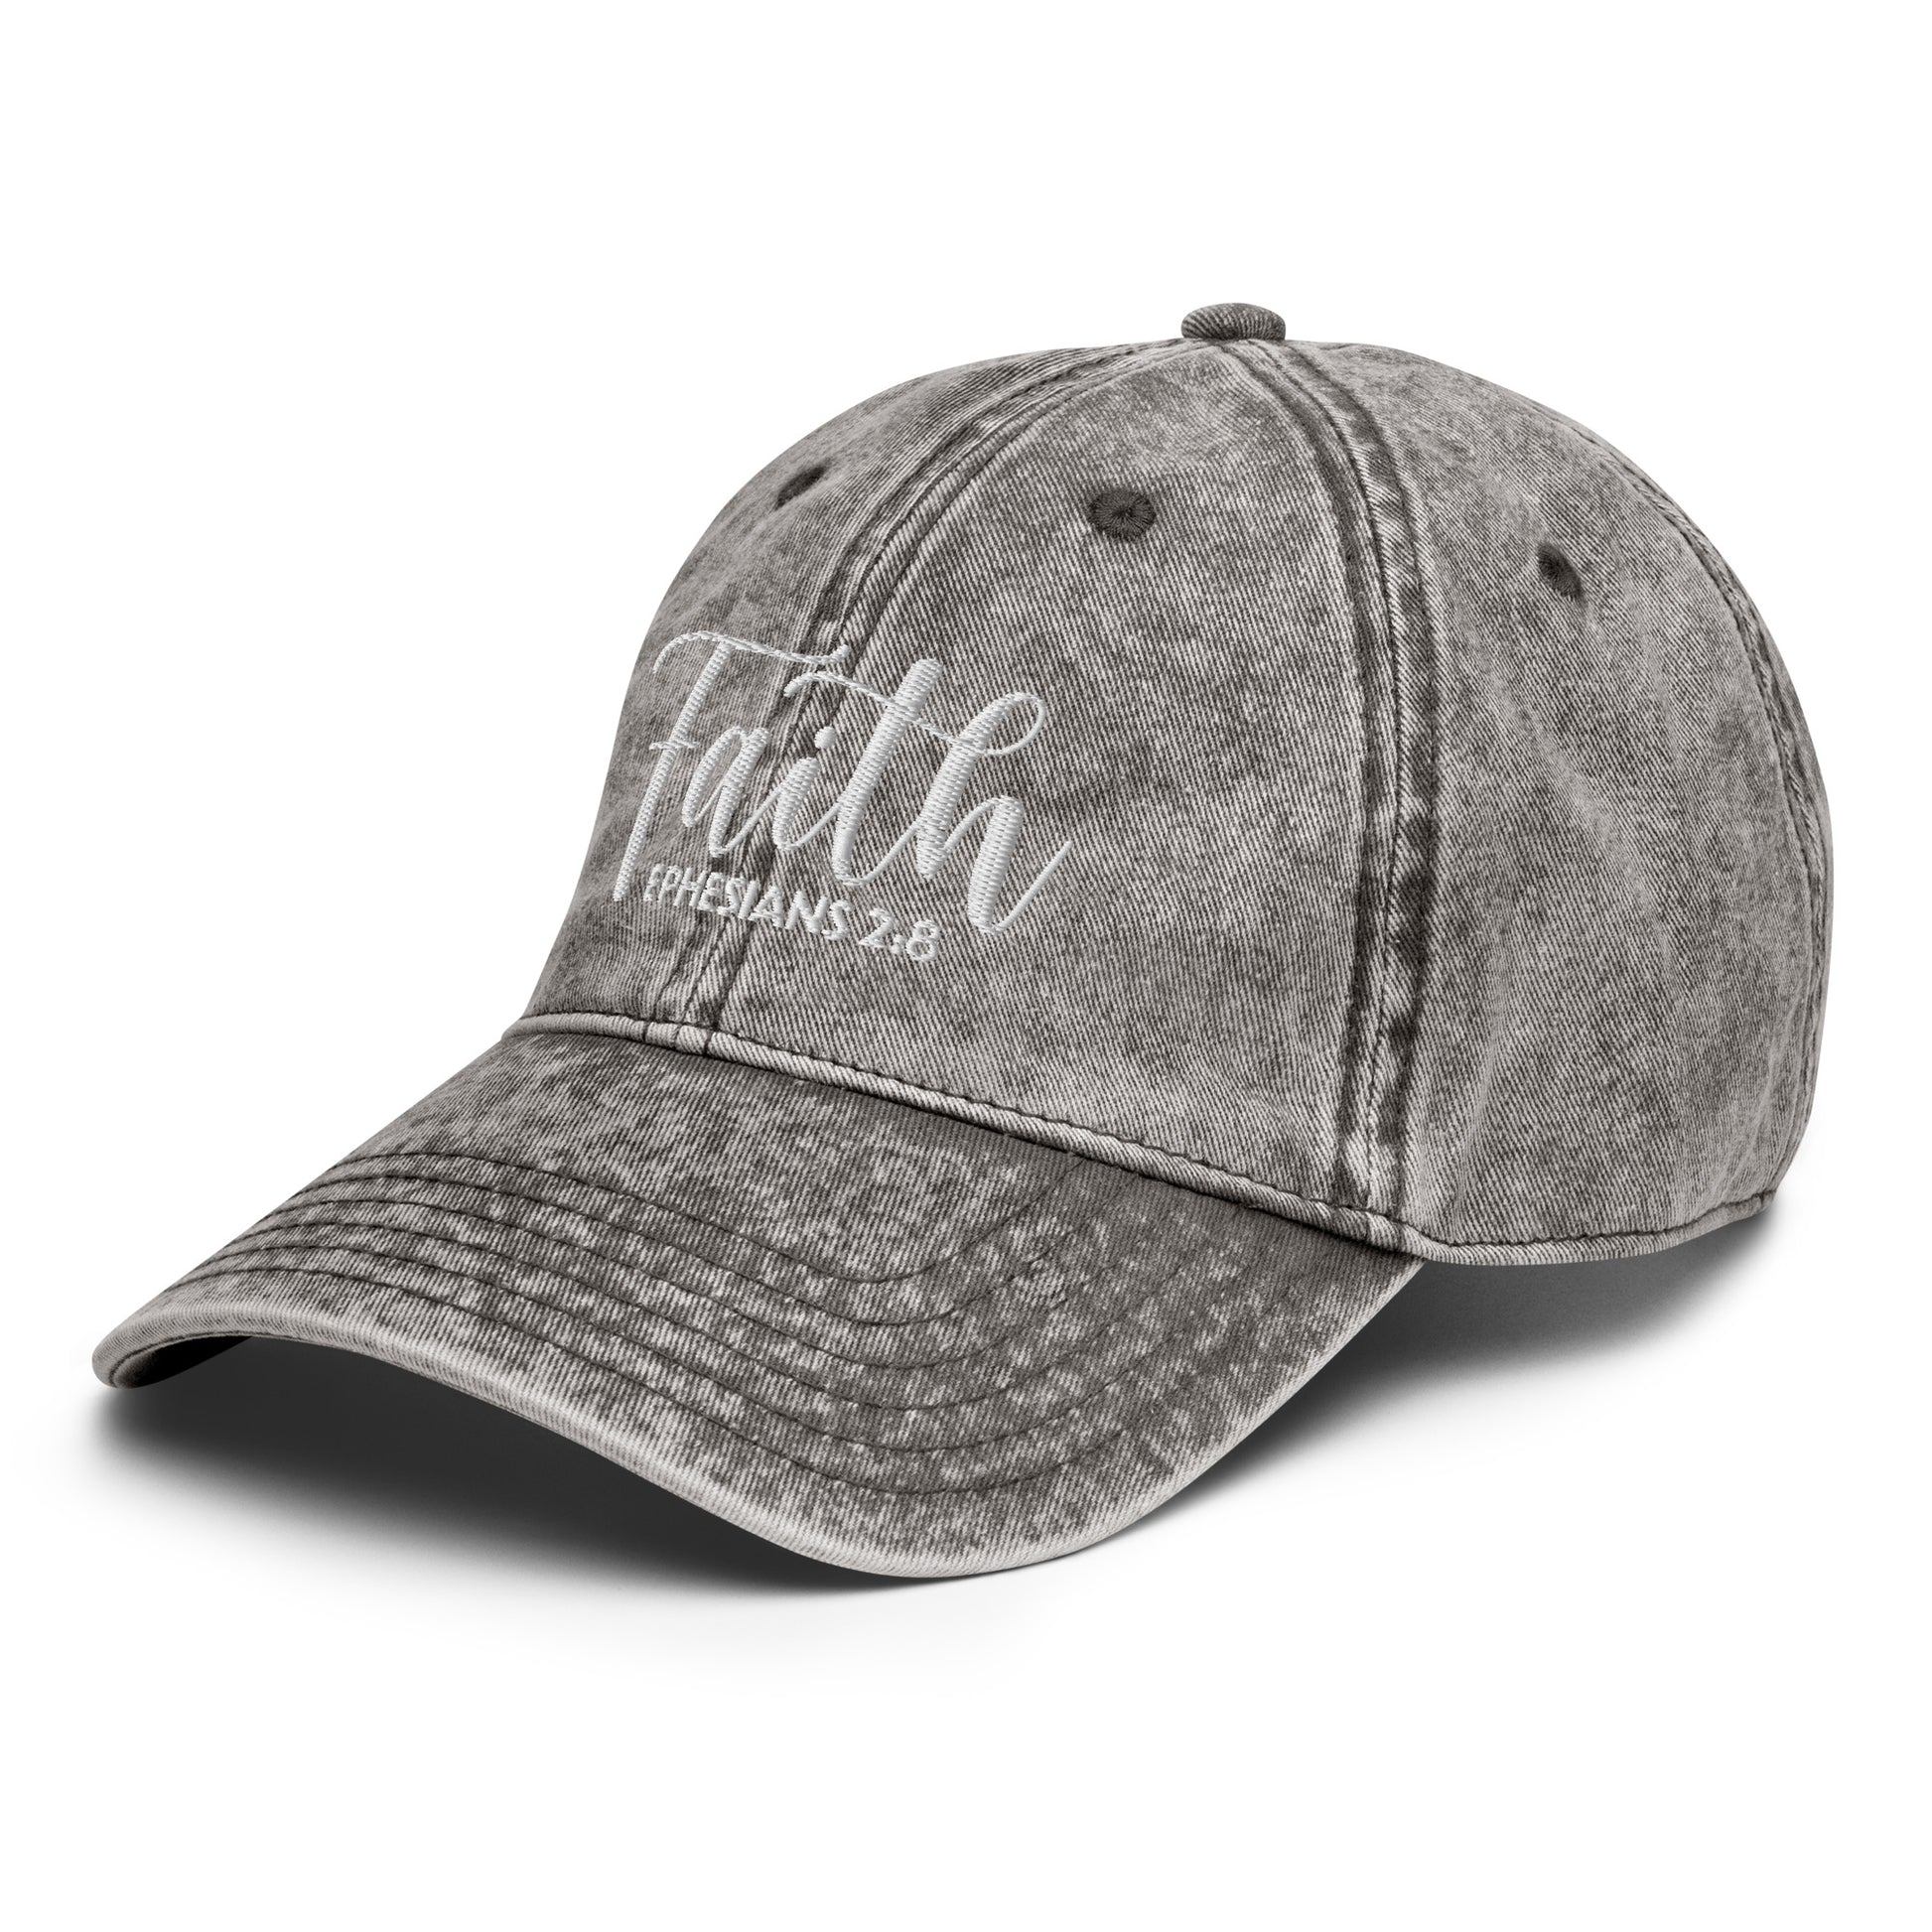 Faith Vintage Cotton Twill Embroidered Cap - Humble & Faithful Co.